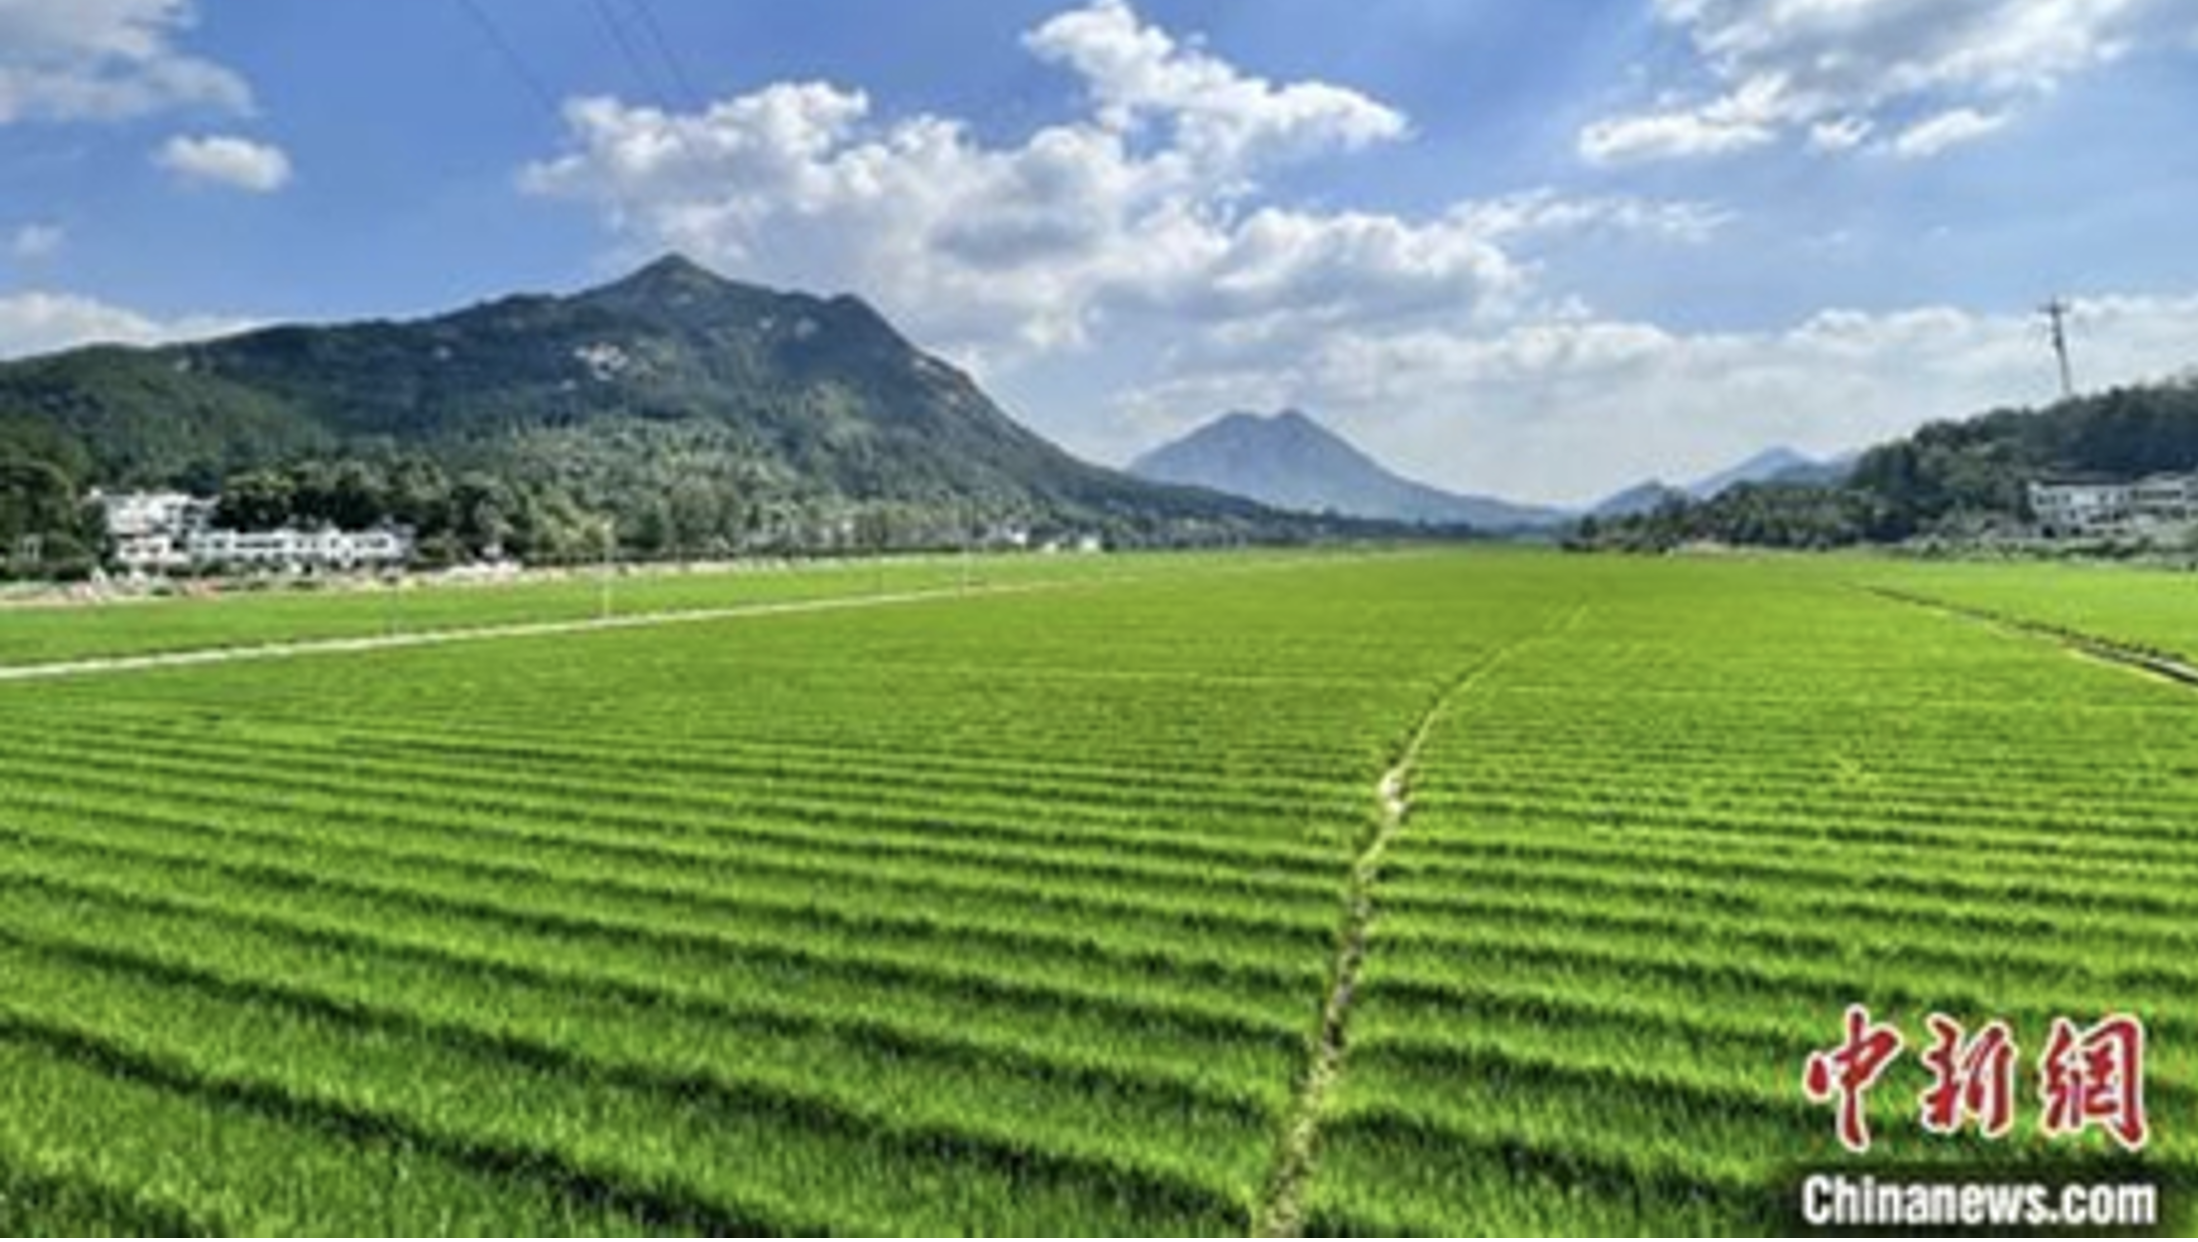 “Red lotus” hybrid rice is already grown on over 30 million ha